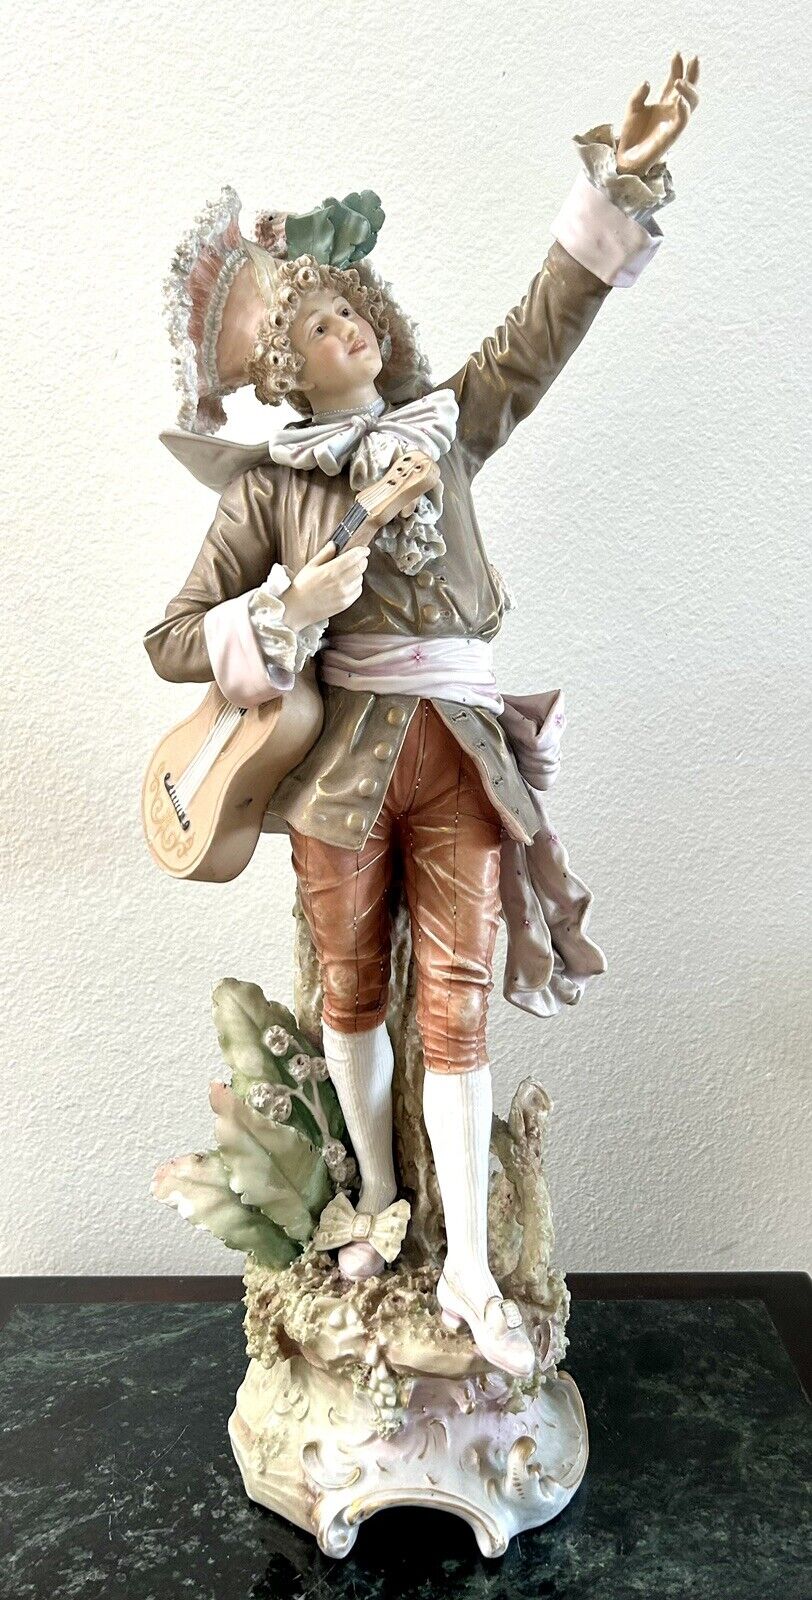 Antique Royal Dux Victorian Man with Guitar Sculpture Figurine 21”H